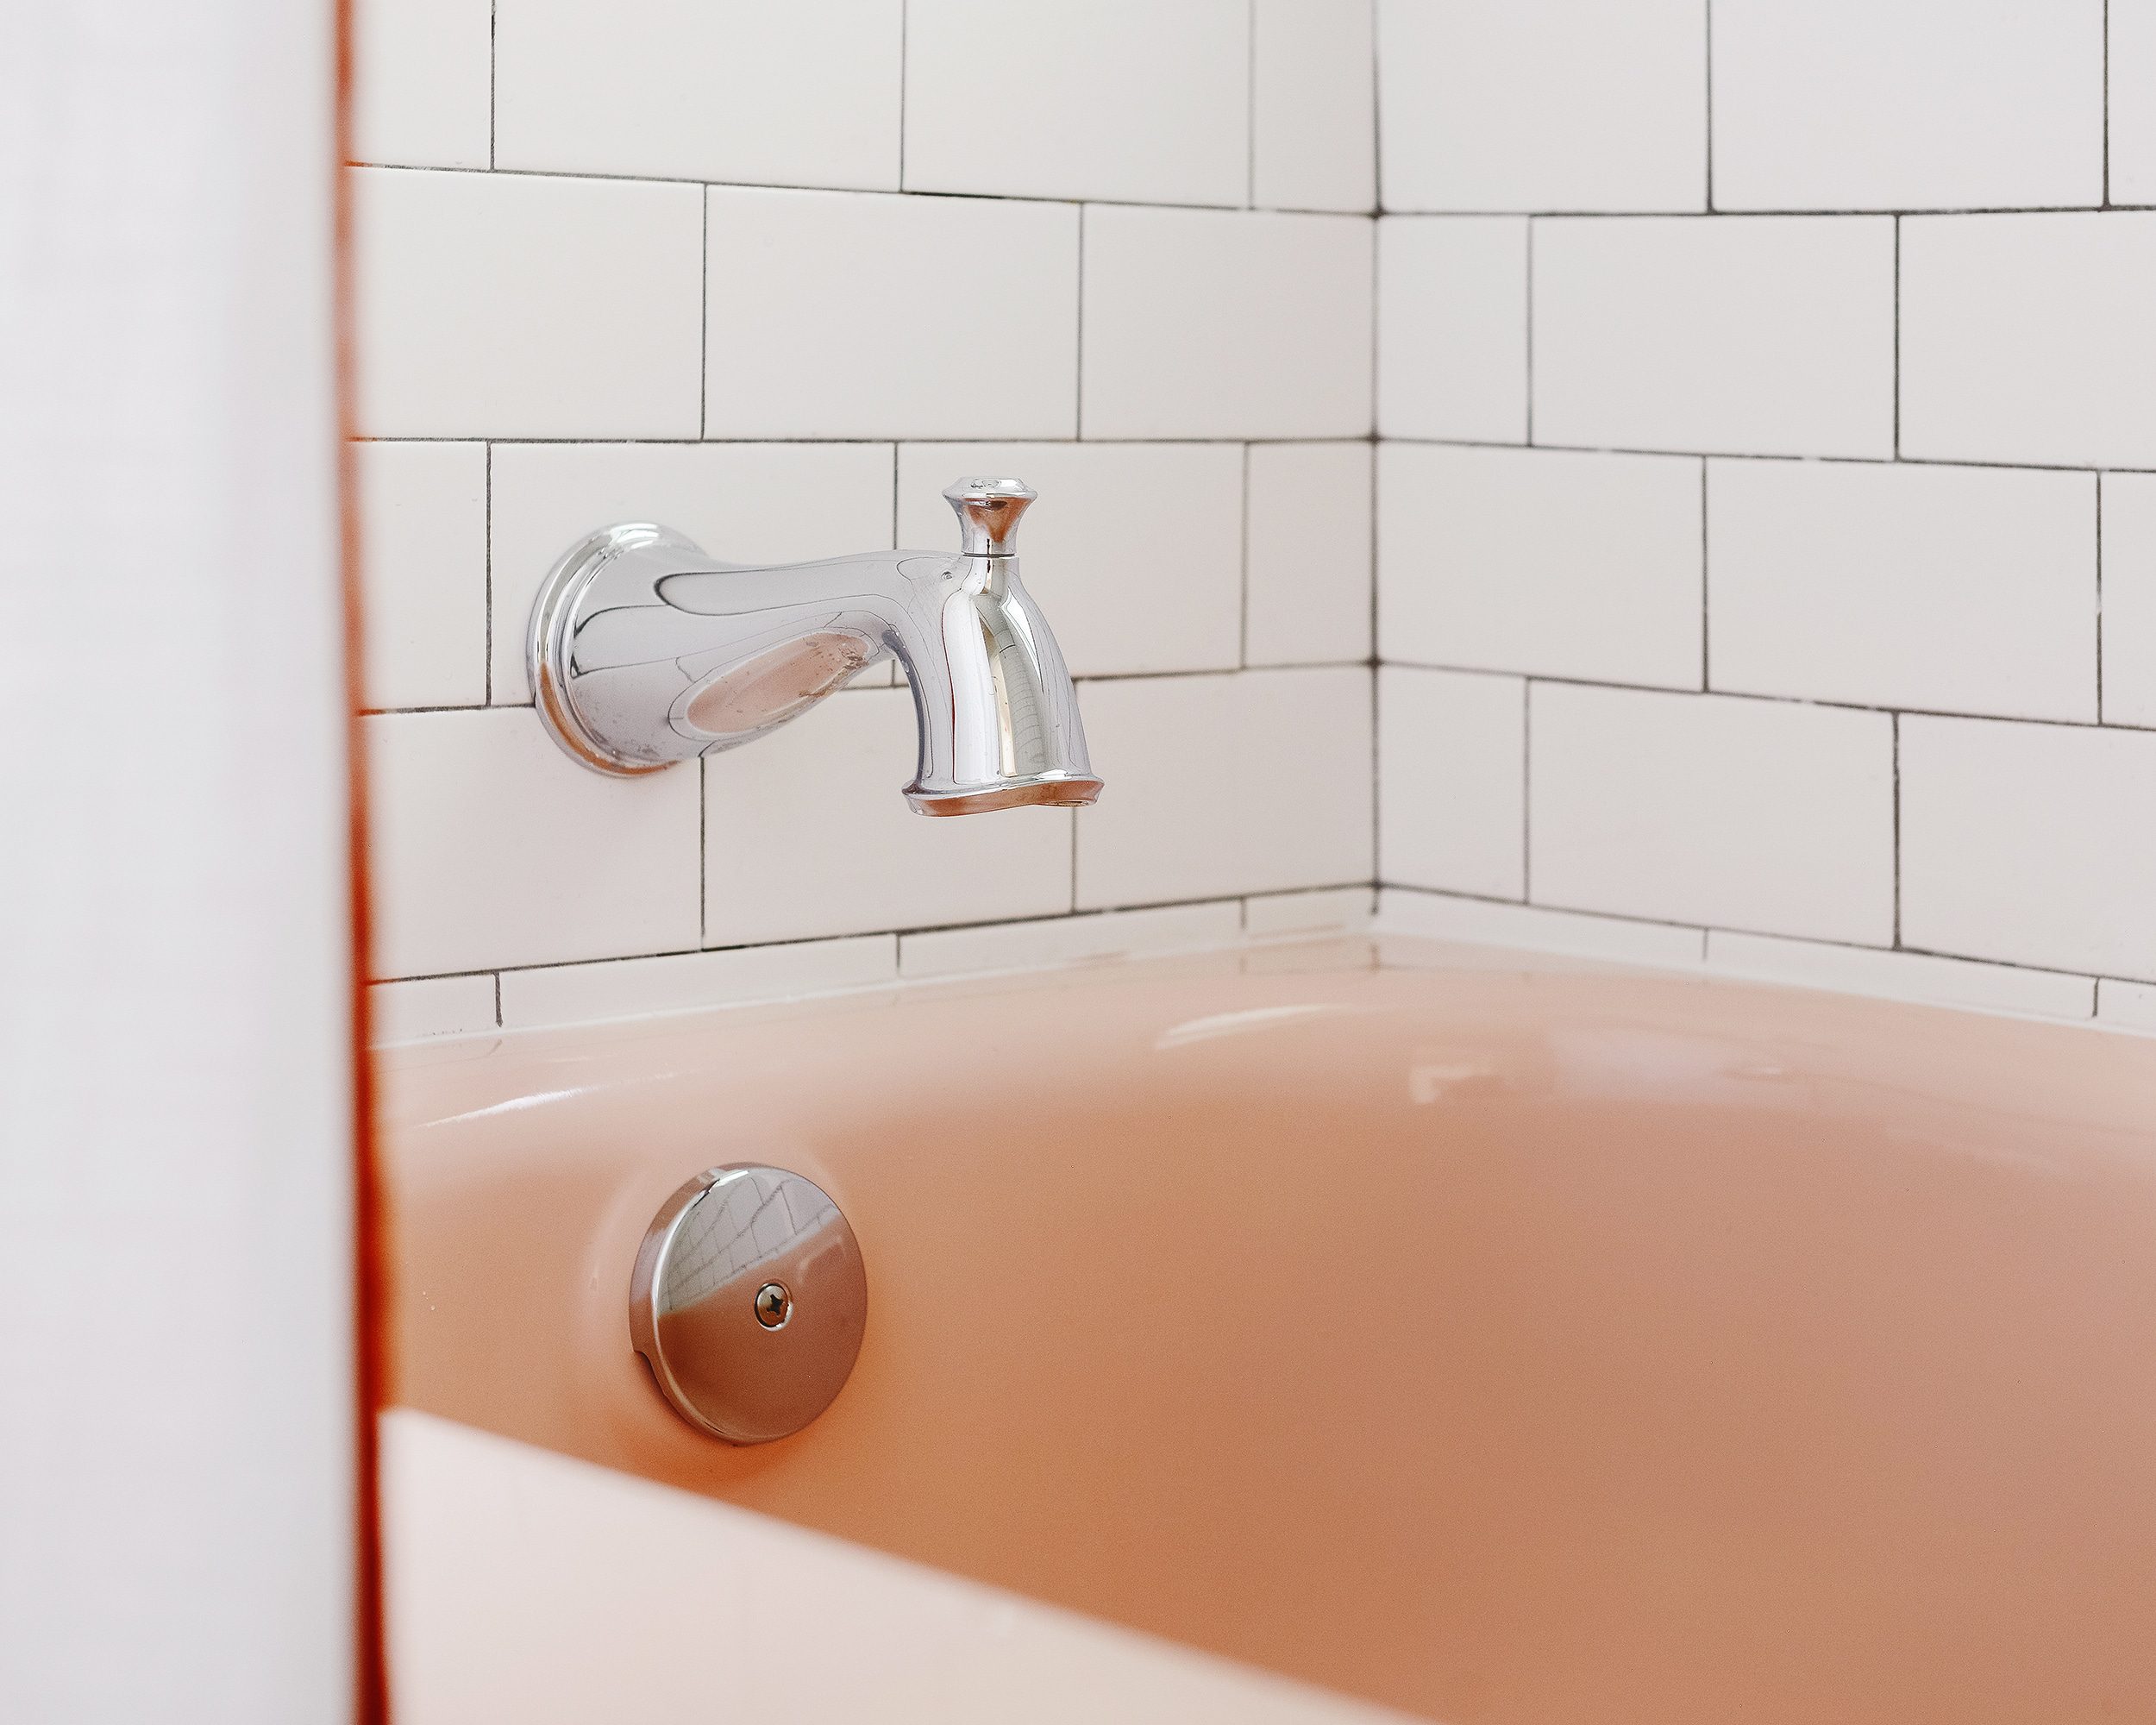 Our freshly reglazed vintage pink bathtub! | via Yellow Brick Home